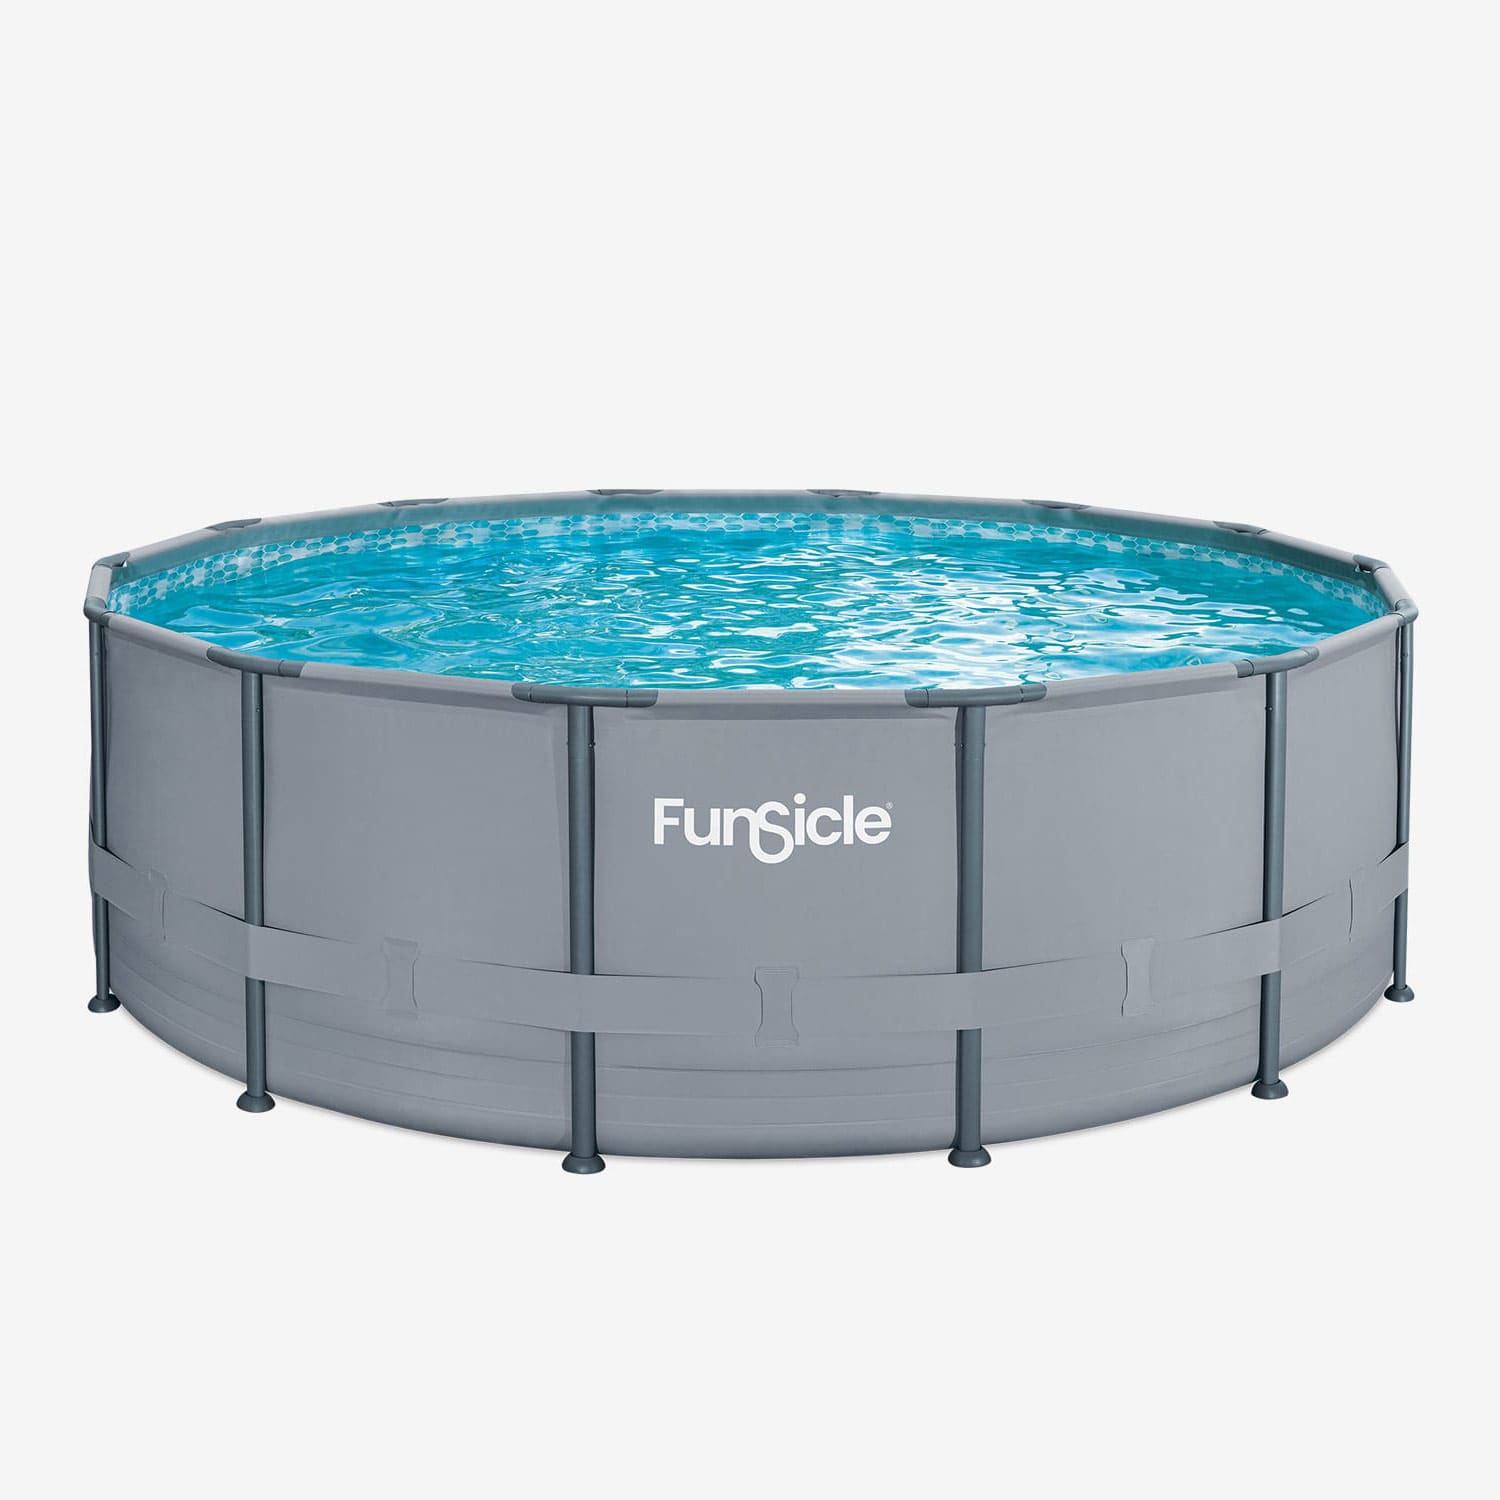 Funsicle 14 ft Oasis Pool